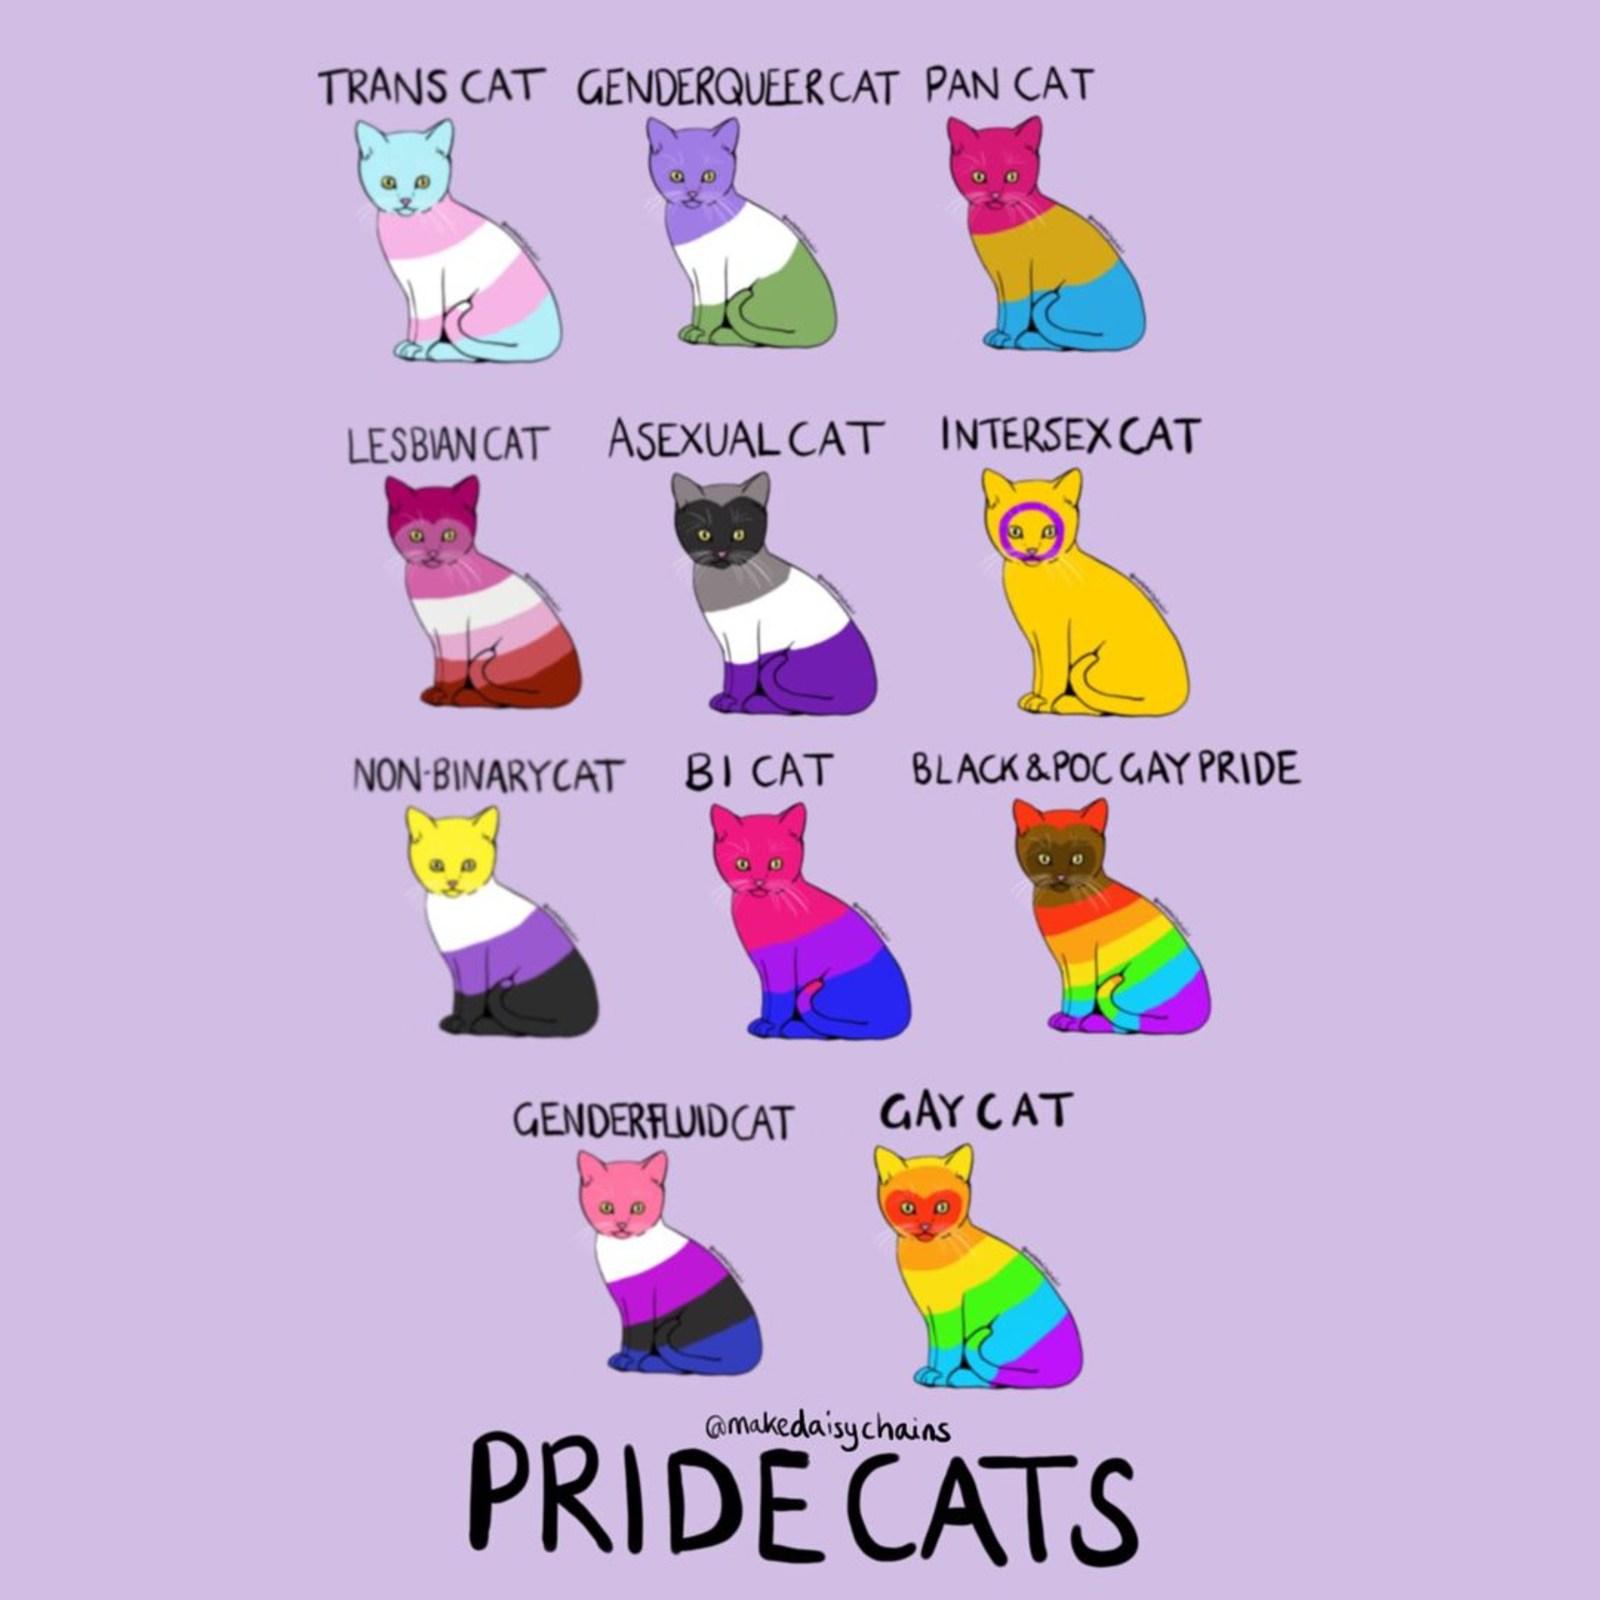 Pride cats, trans cat, genderqueer cat, pan cat, lesbian cat, bisexual cat, asexual cat, intersex cat, non-binary cat, bi cat, black and poc pride cat, genderfluid cat, gay cat - Non binary